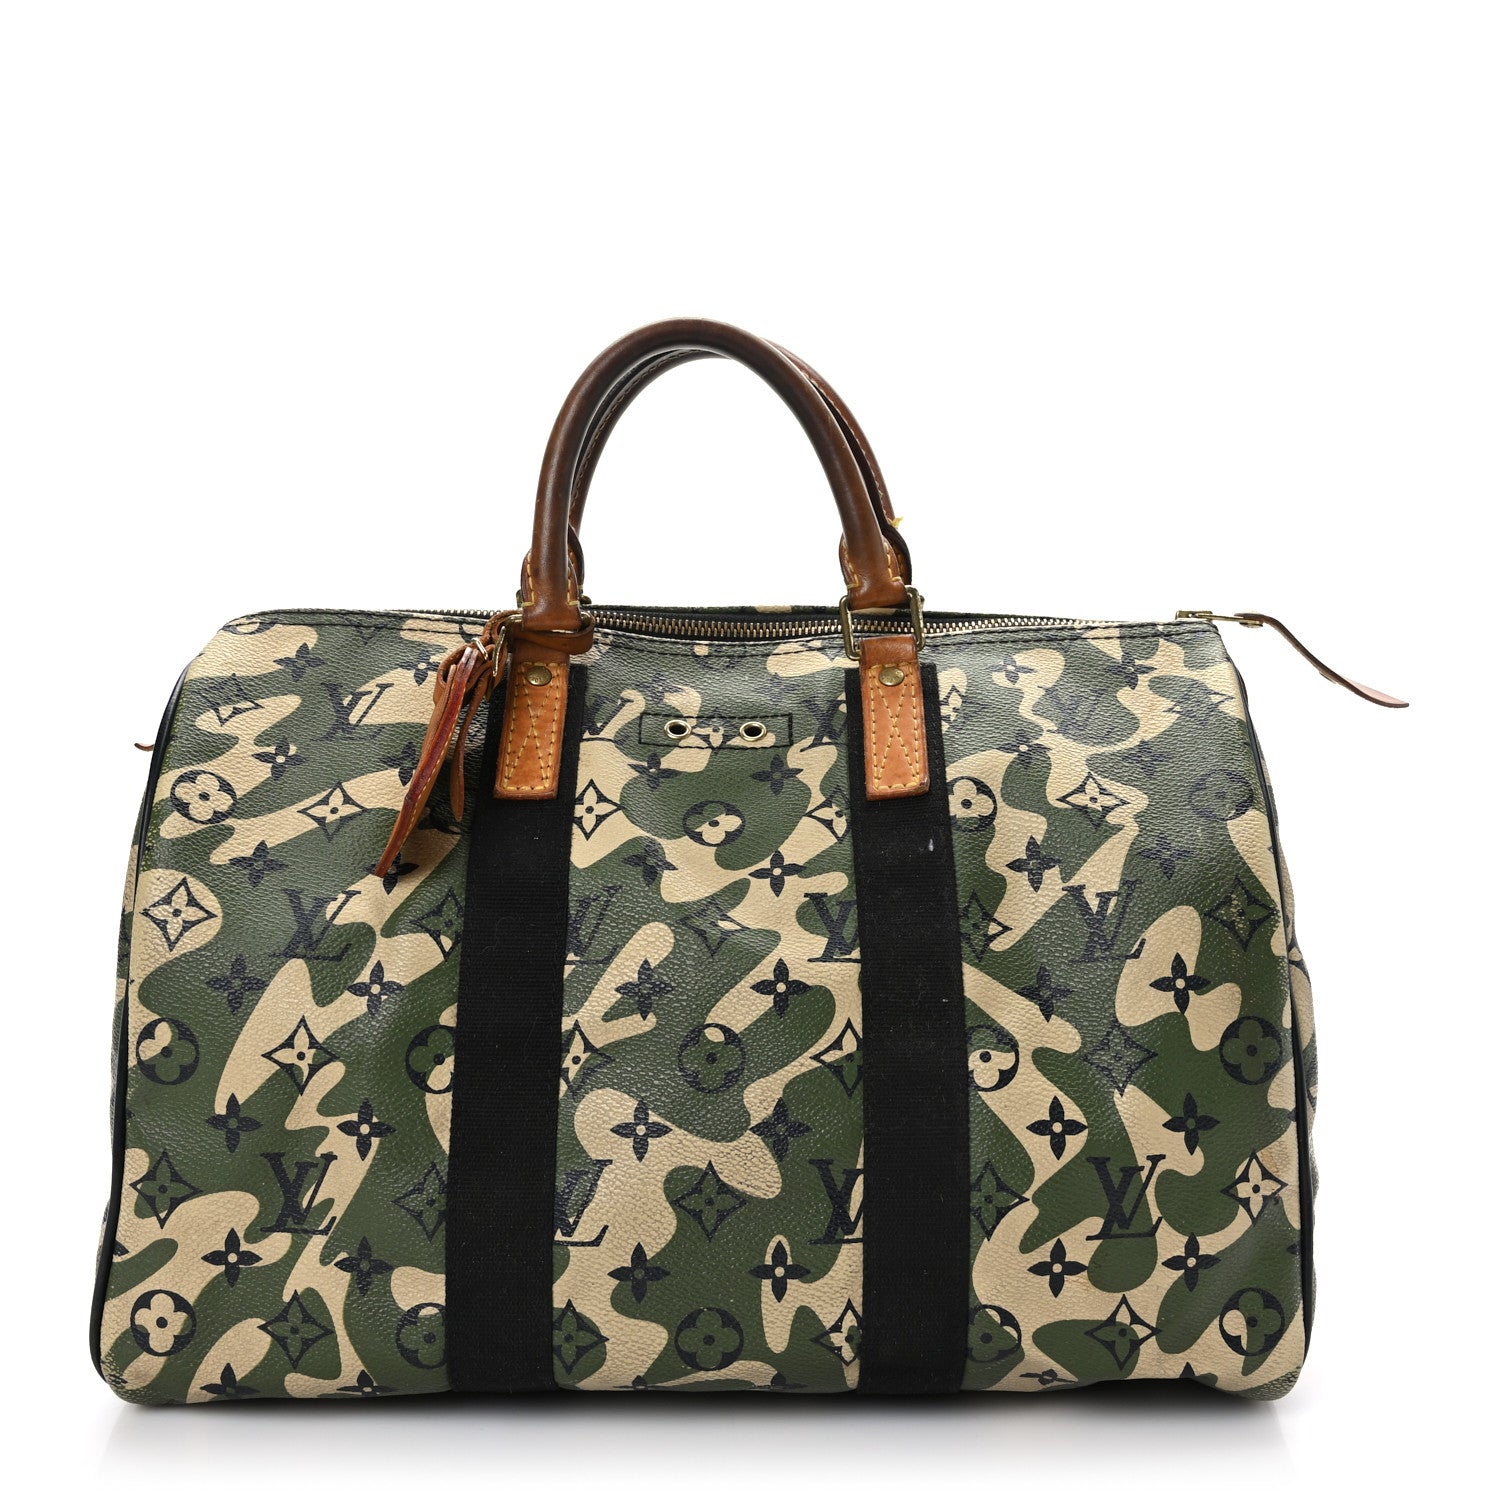 Most Expensive Louis Vuitton Bags monogramouflage speedy